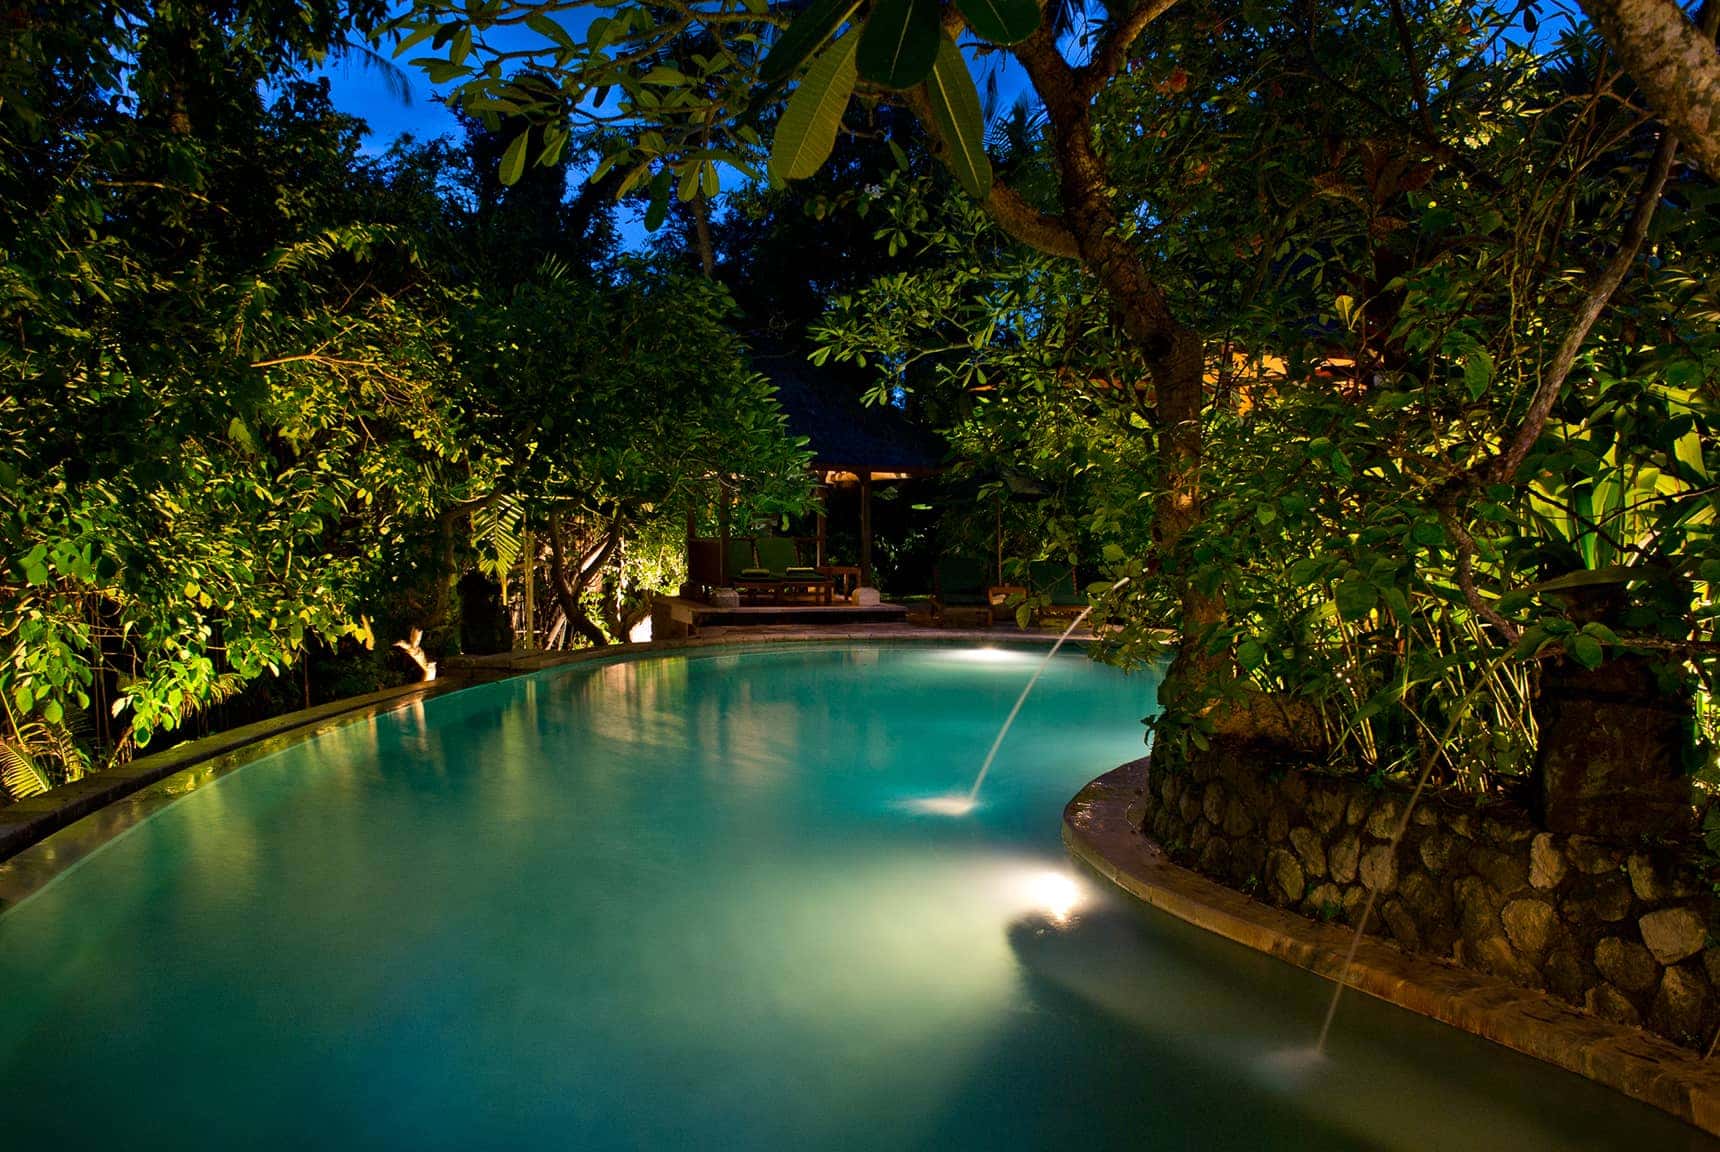 Villa Bougainvillea - Pererenan, Bali Indonesia (Bali villa photography by master photographer Rick Carmichael of LuxViz)